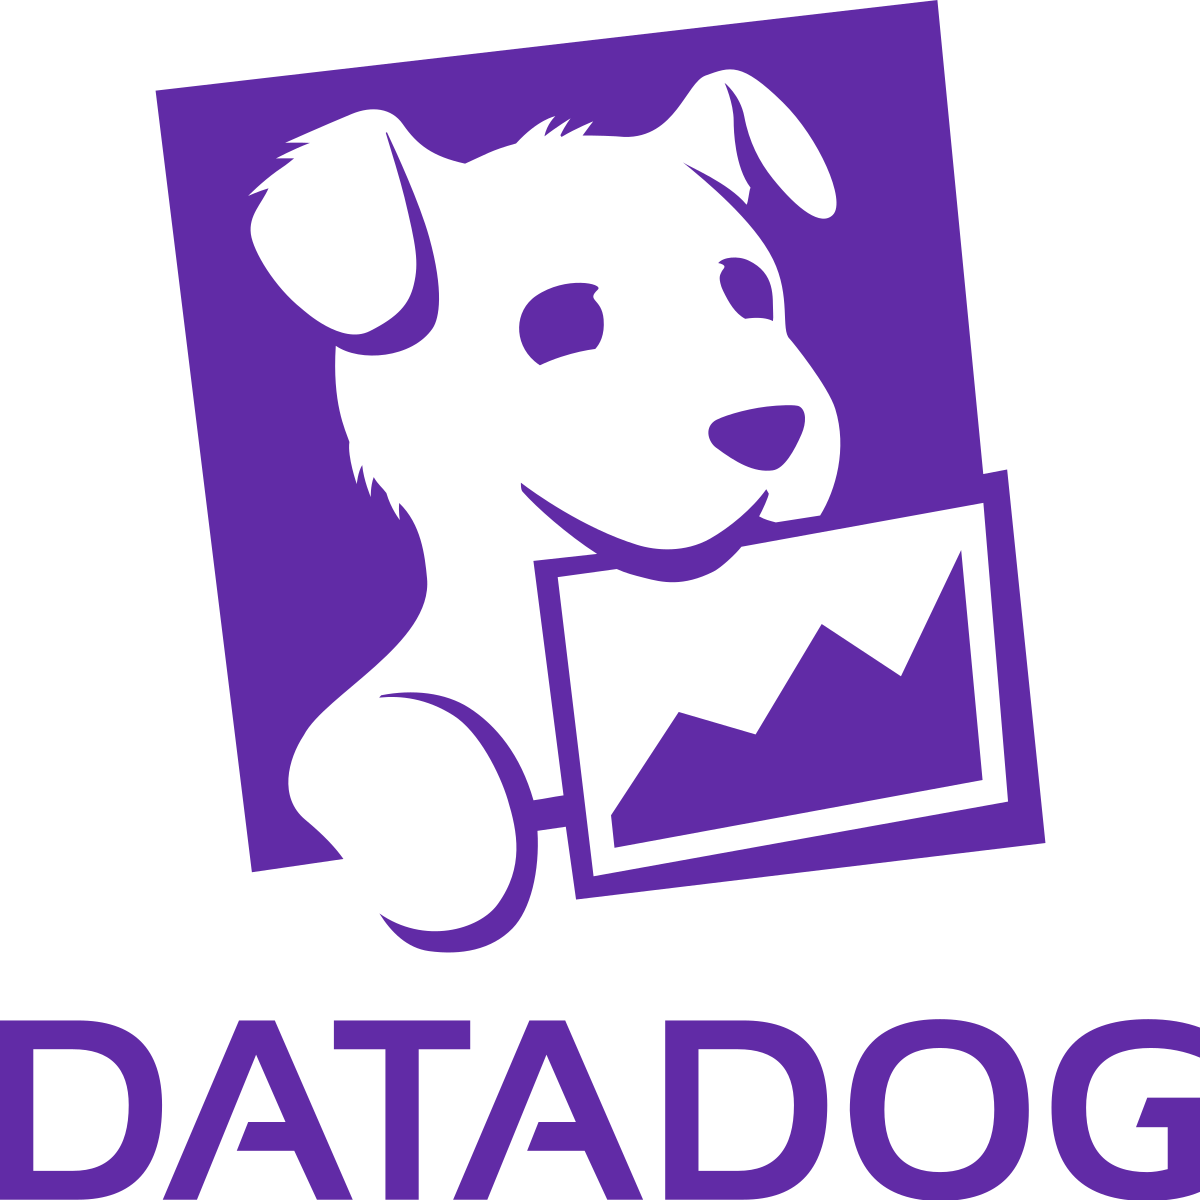 Datadog logo.svg